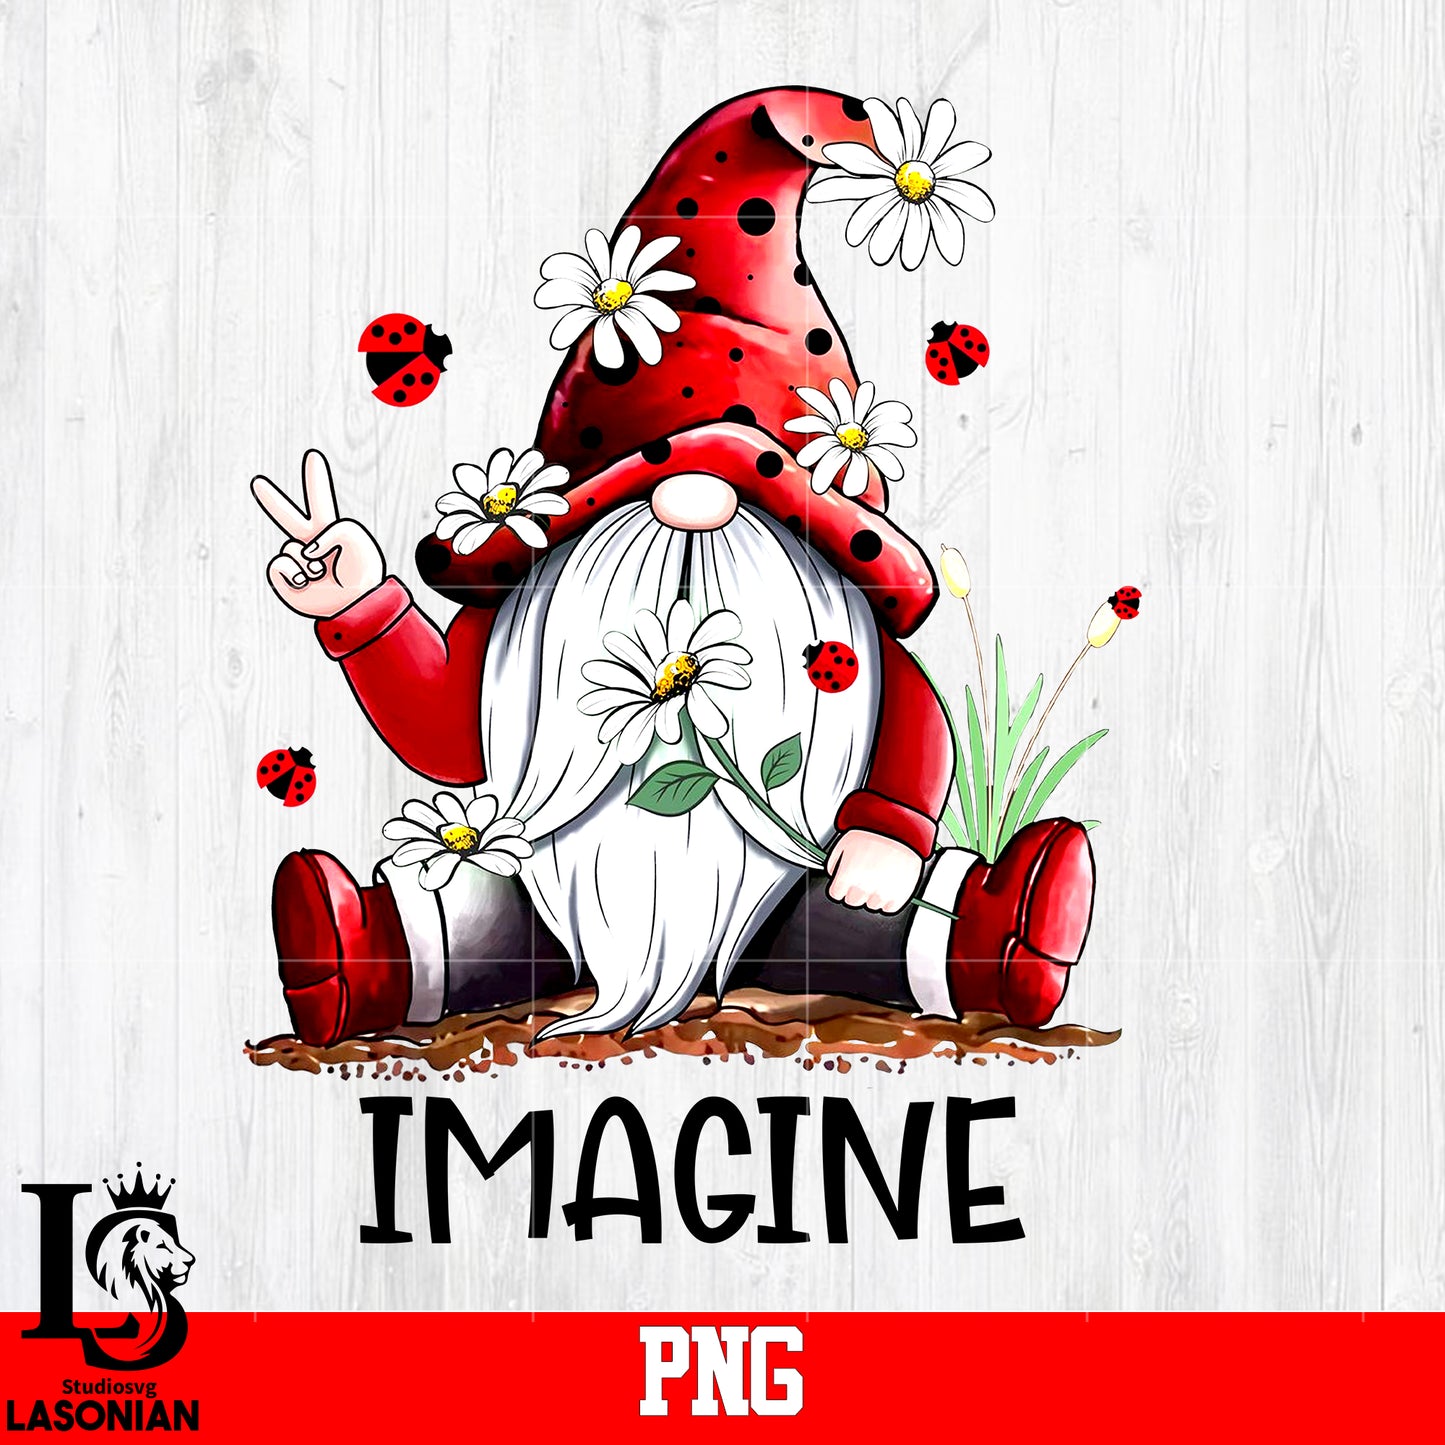 Imagine PNG file